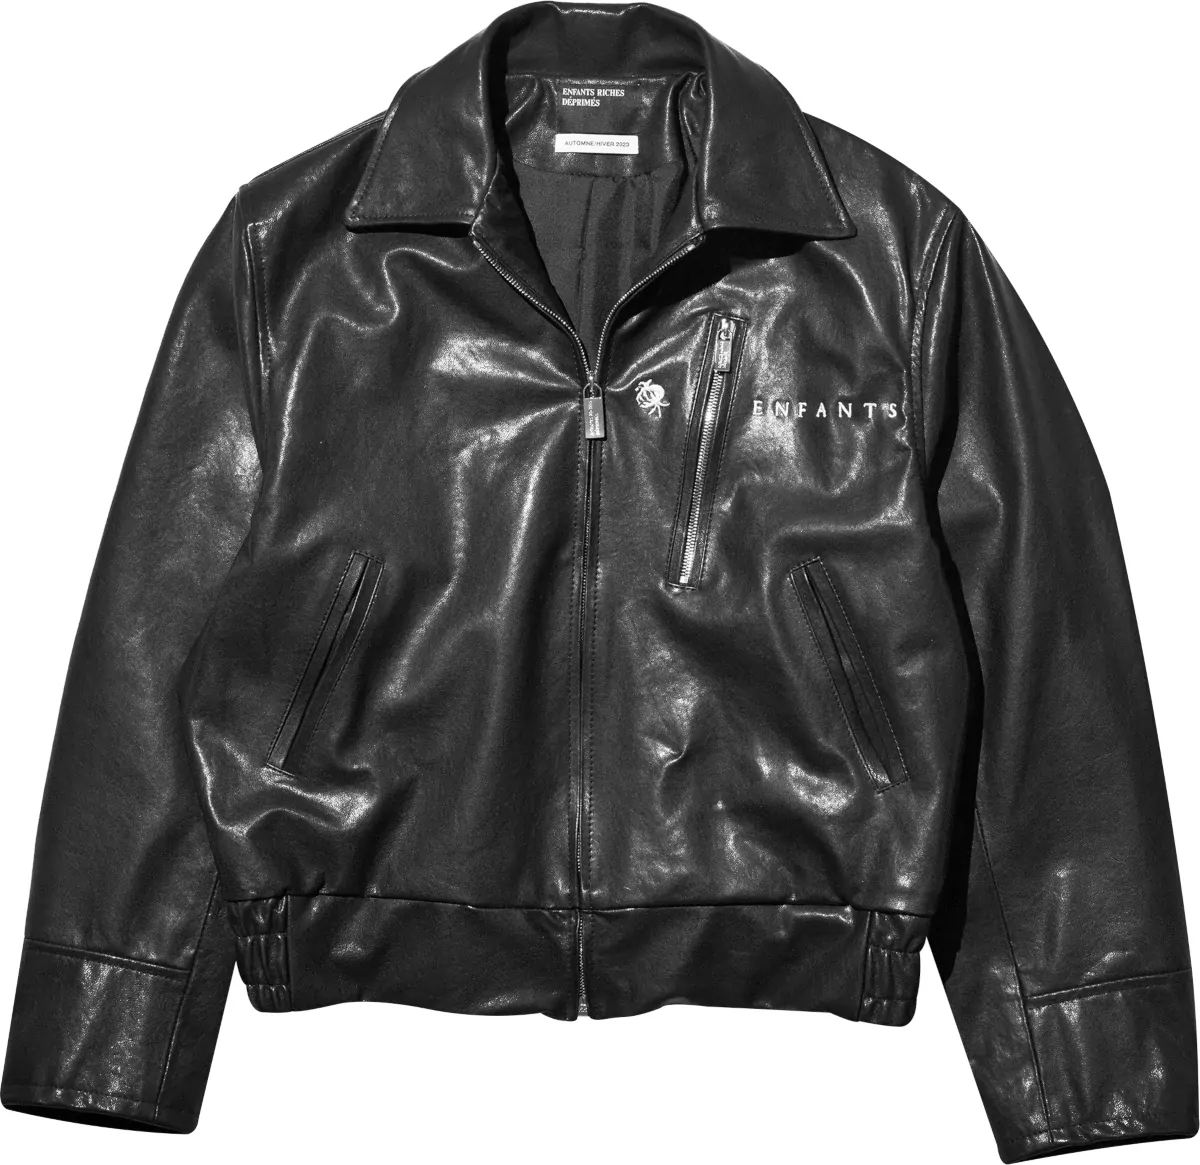 Erd Black Leather Opium Den Leather Jacket